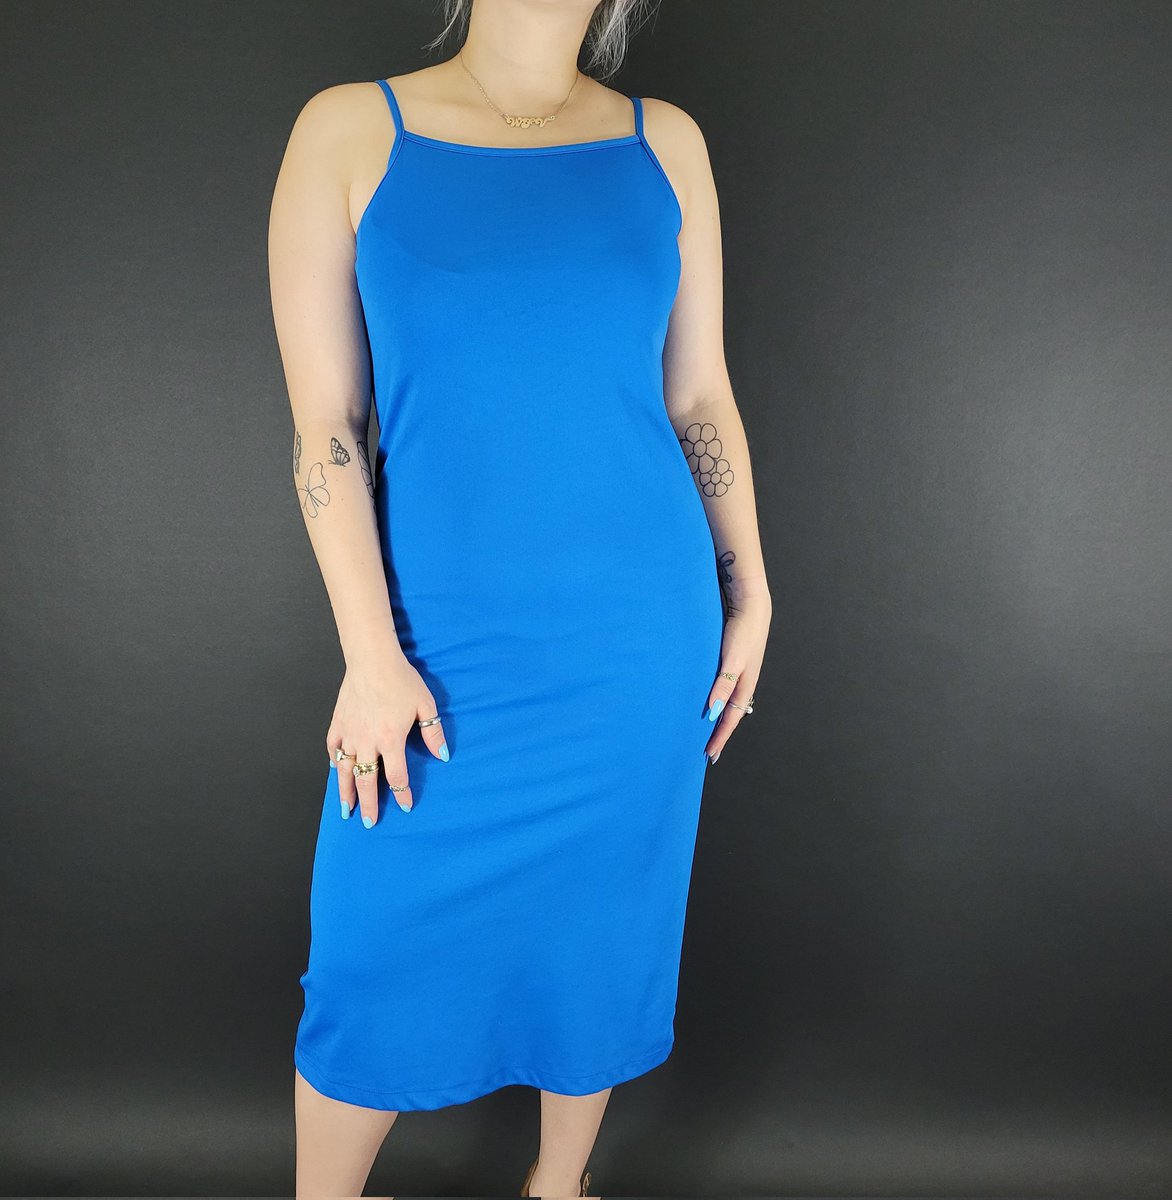 ⭐90s Amy Byer Blue Tank Dress⭐
🌼wildfirevintageco.com🌼
#amybyer #dress #90sdress #90sfashion #90sstyle #1990sclothing #tankdress #casualoutfit #casualdress #90sootd #90sstreetwear #90sstreetfashion #grunge #style #clothingforsale #wildfirevintage